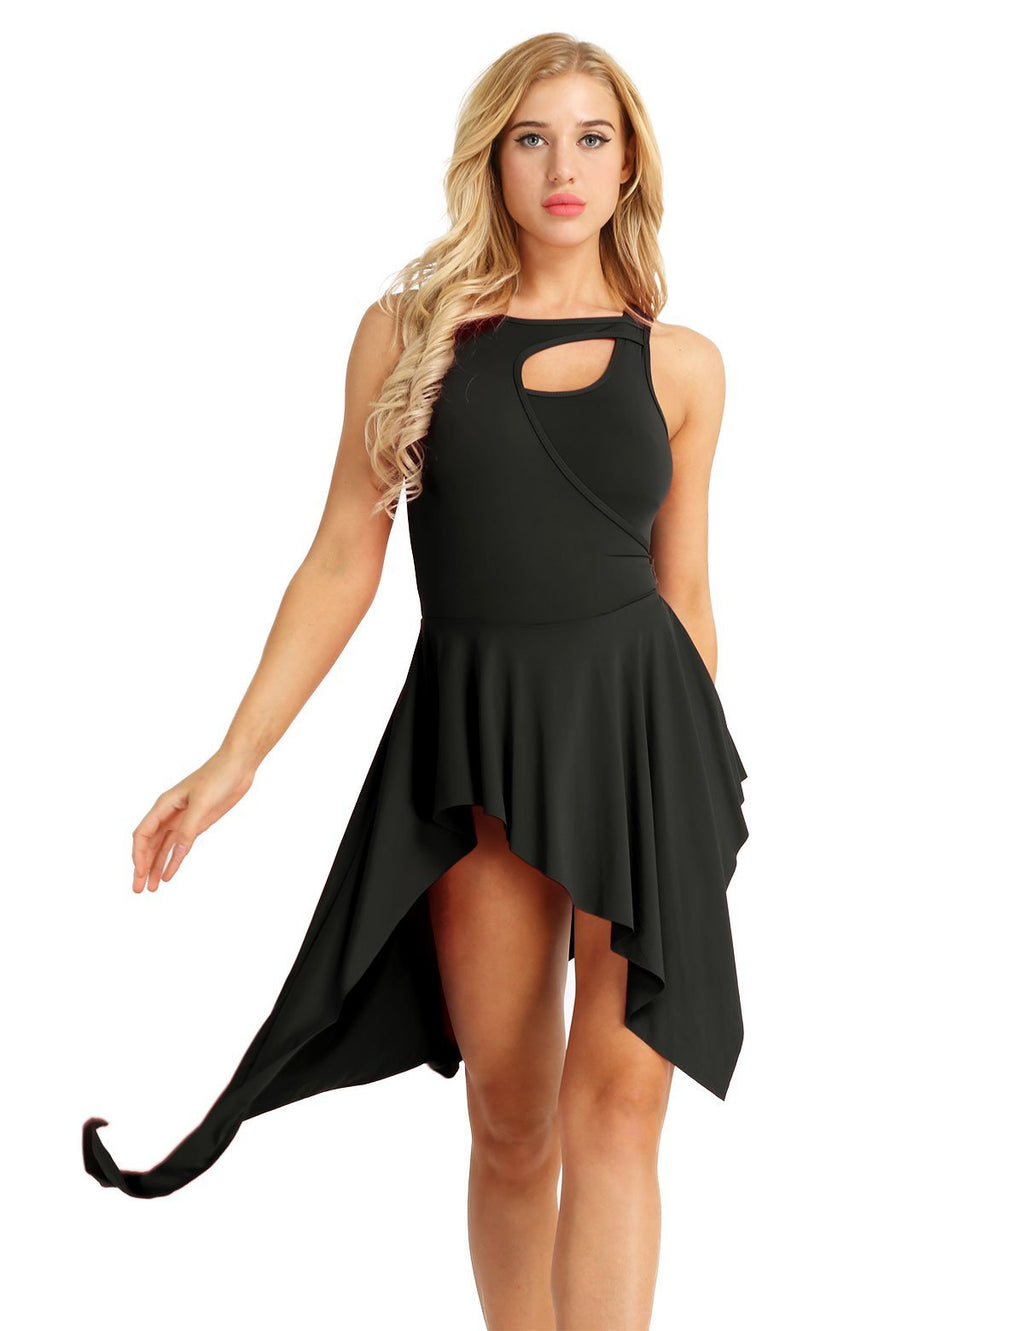 [AUSTRALIA] - zdhoor Lyrical Women Adult Ballet Dance Dress Costume Cutout Camisole Leotard High Low Contemporary Dress Black Small 